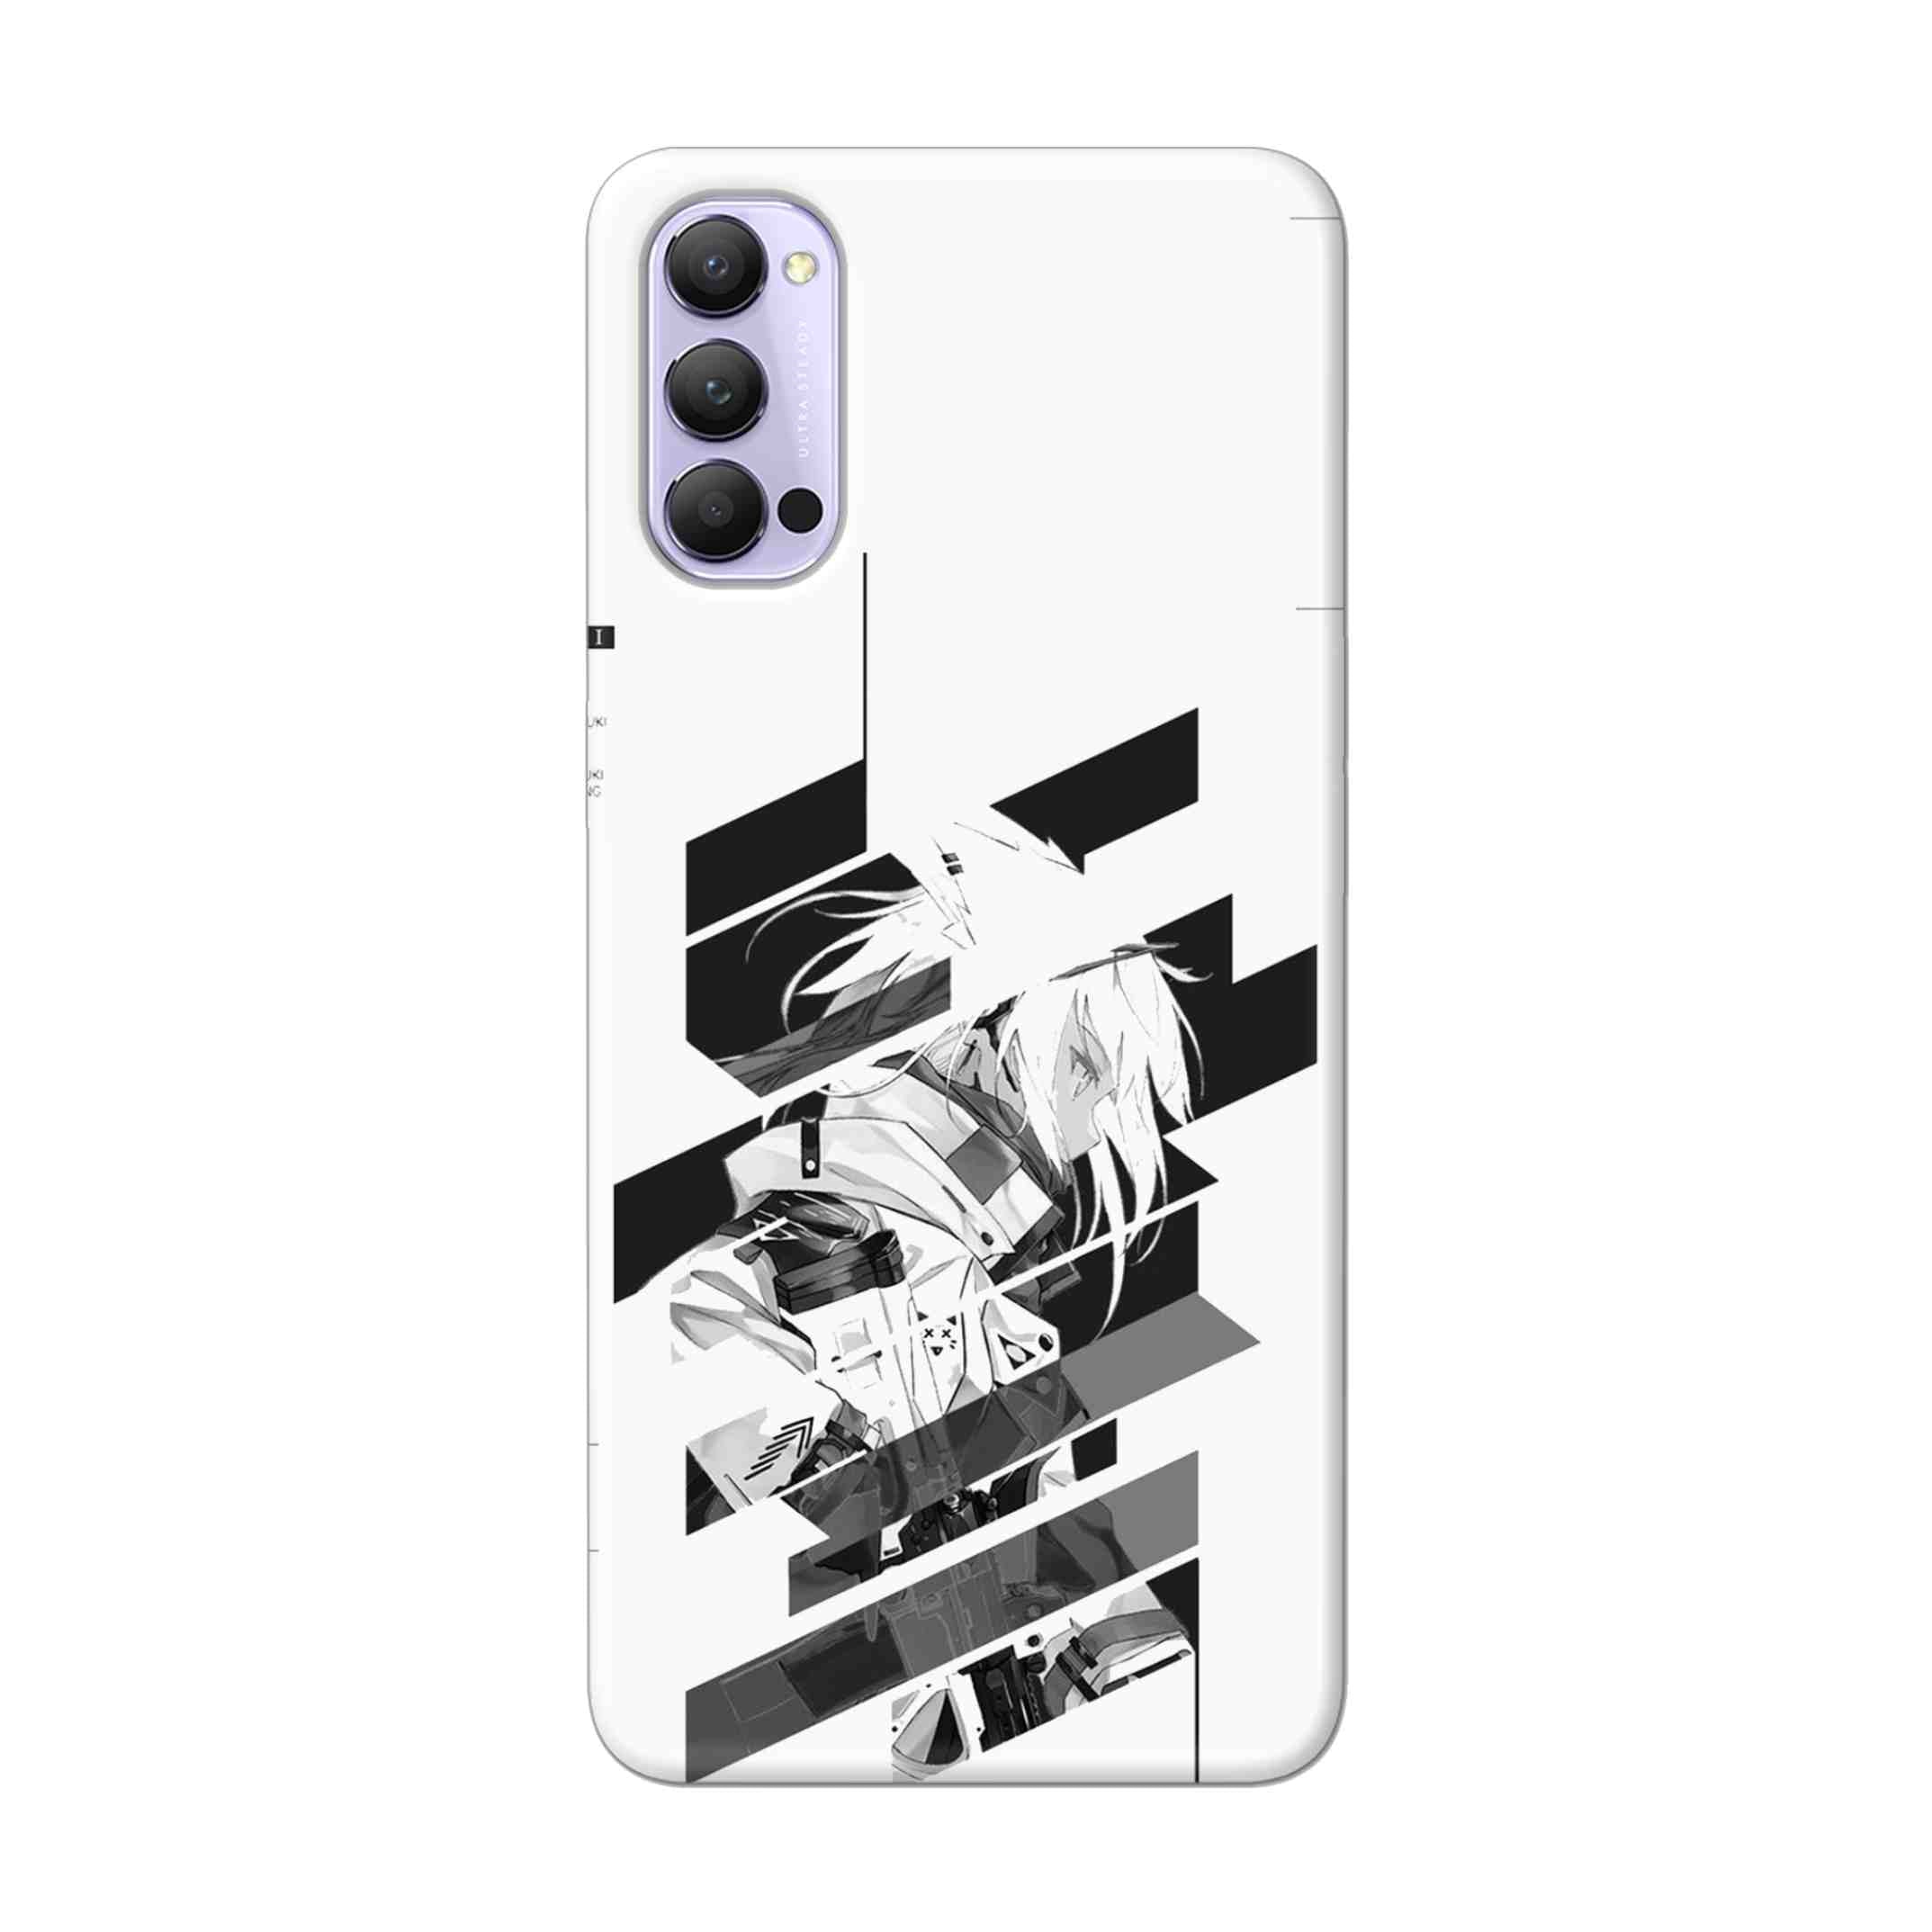 Buy Fubuki Hard Back Mobile Phone Case Cover For Oppo Reno 4 Pro Online